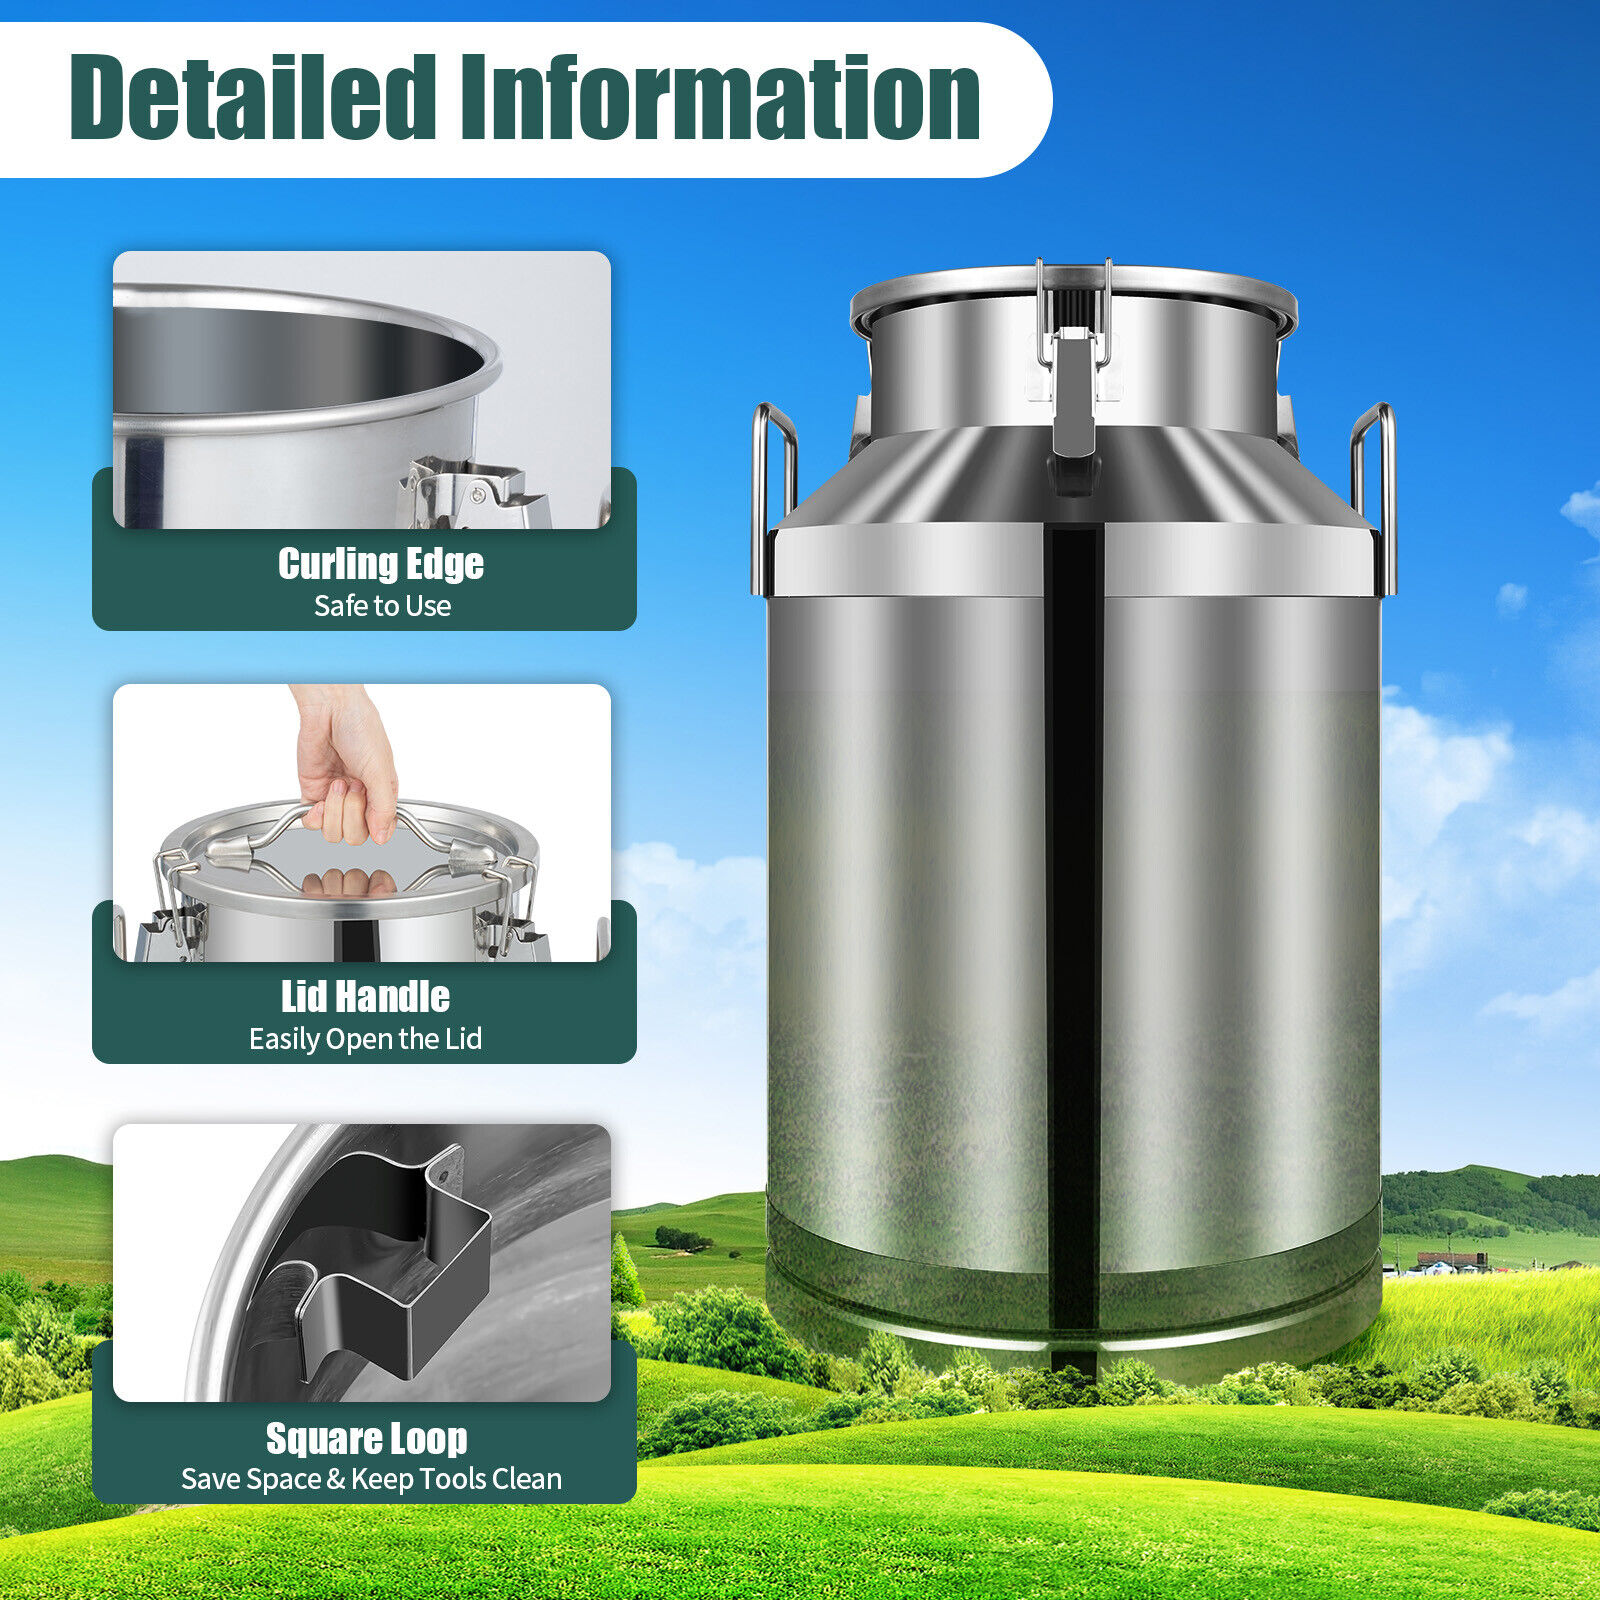 60L/16 Gallon 304 Stainless Steel Milk Can - Heavy Duty Milk Jug Milk Bucket